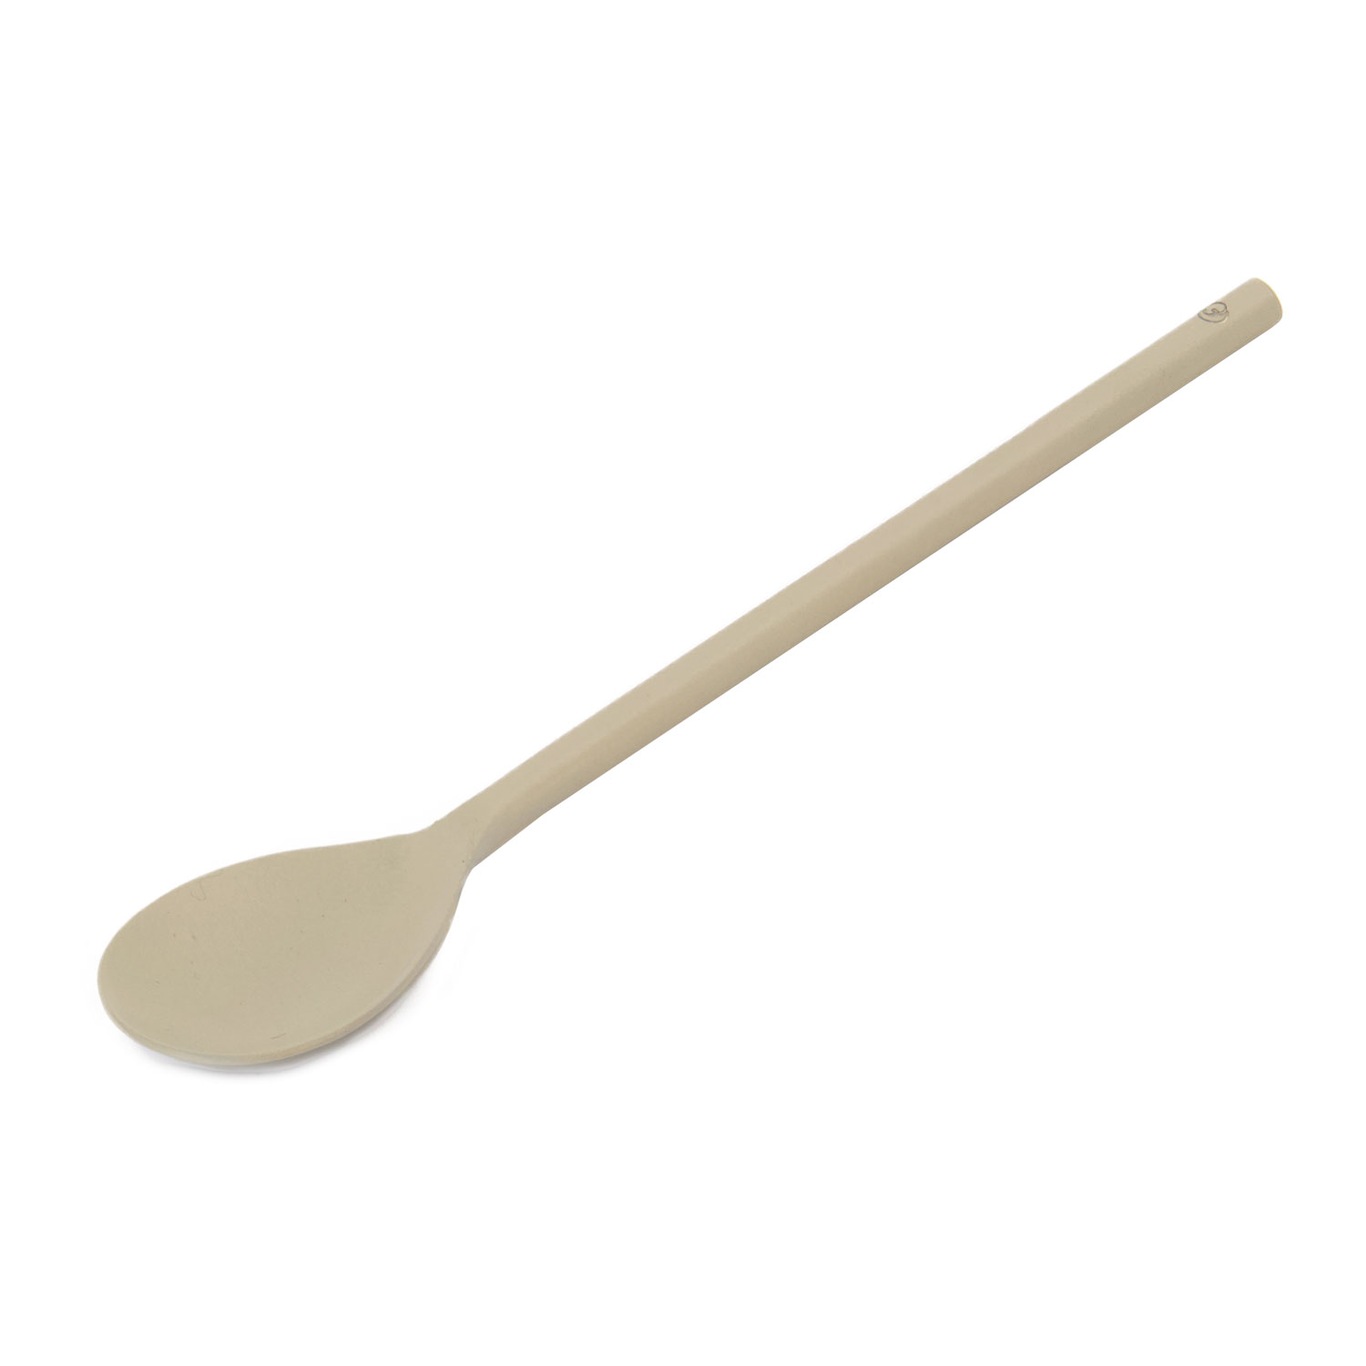 Spoon Small 18 cm, Beige